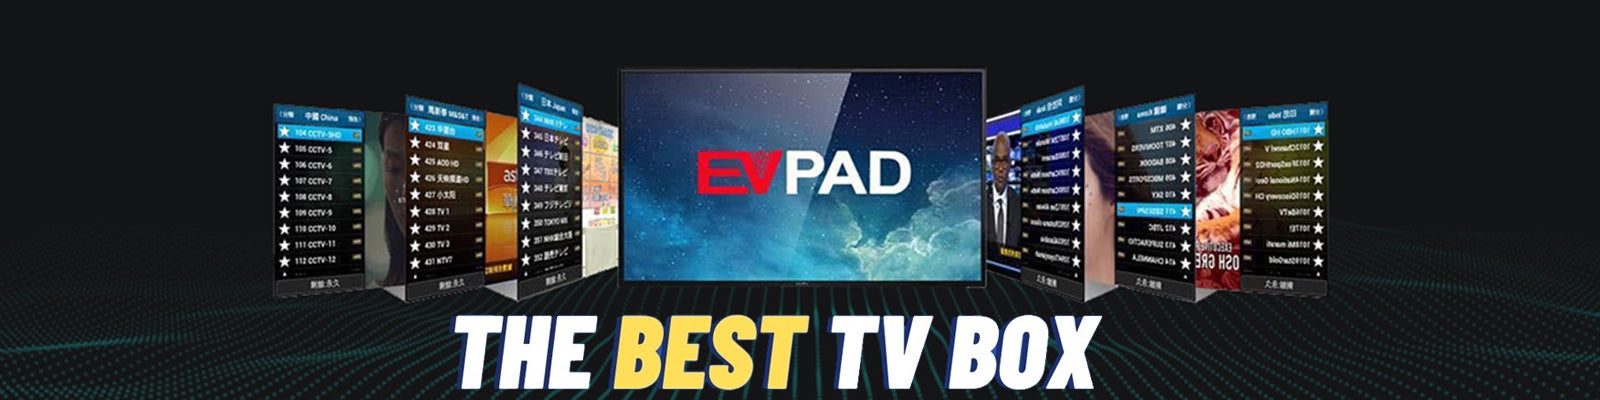 EVPAD THE BEST TV BOX